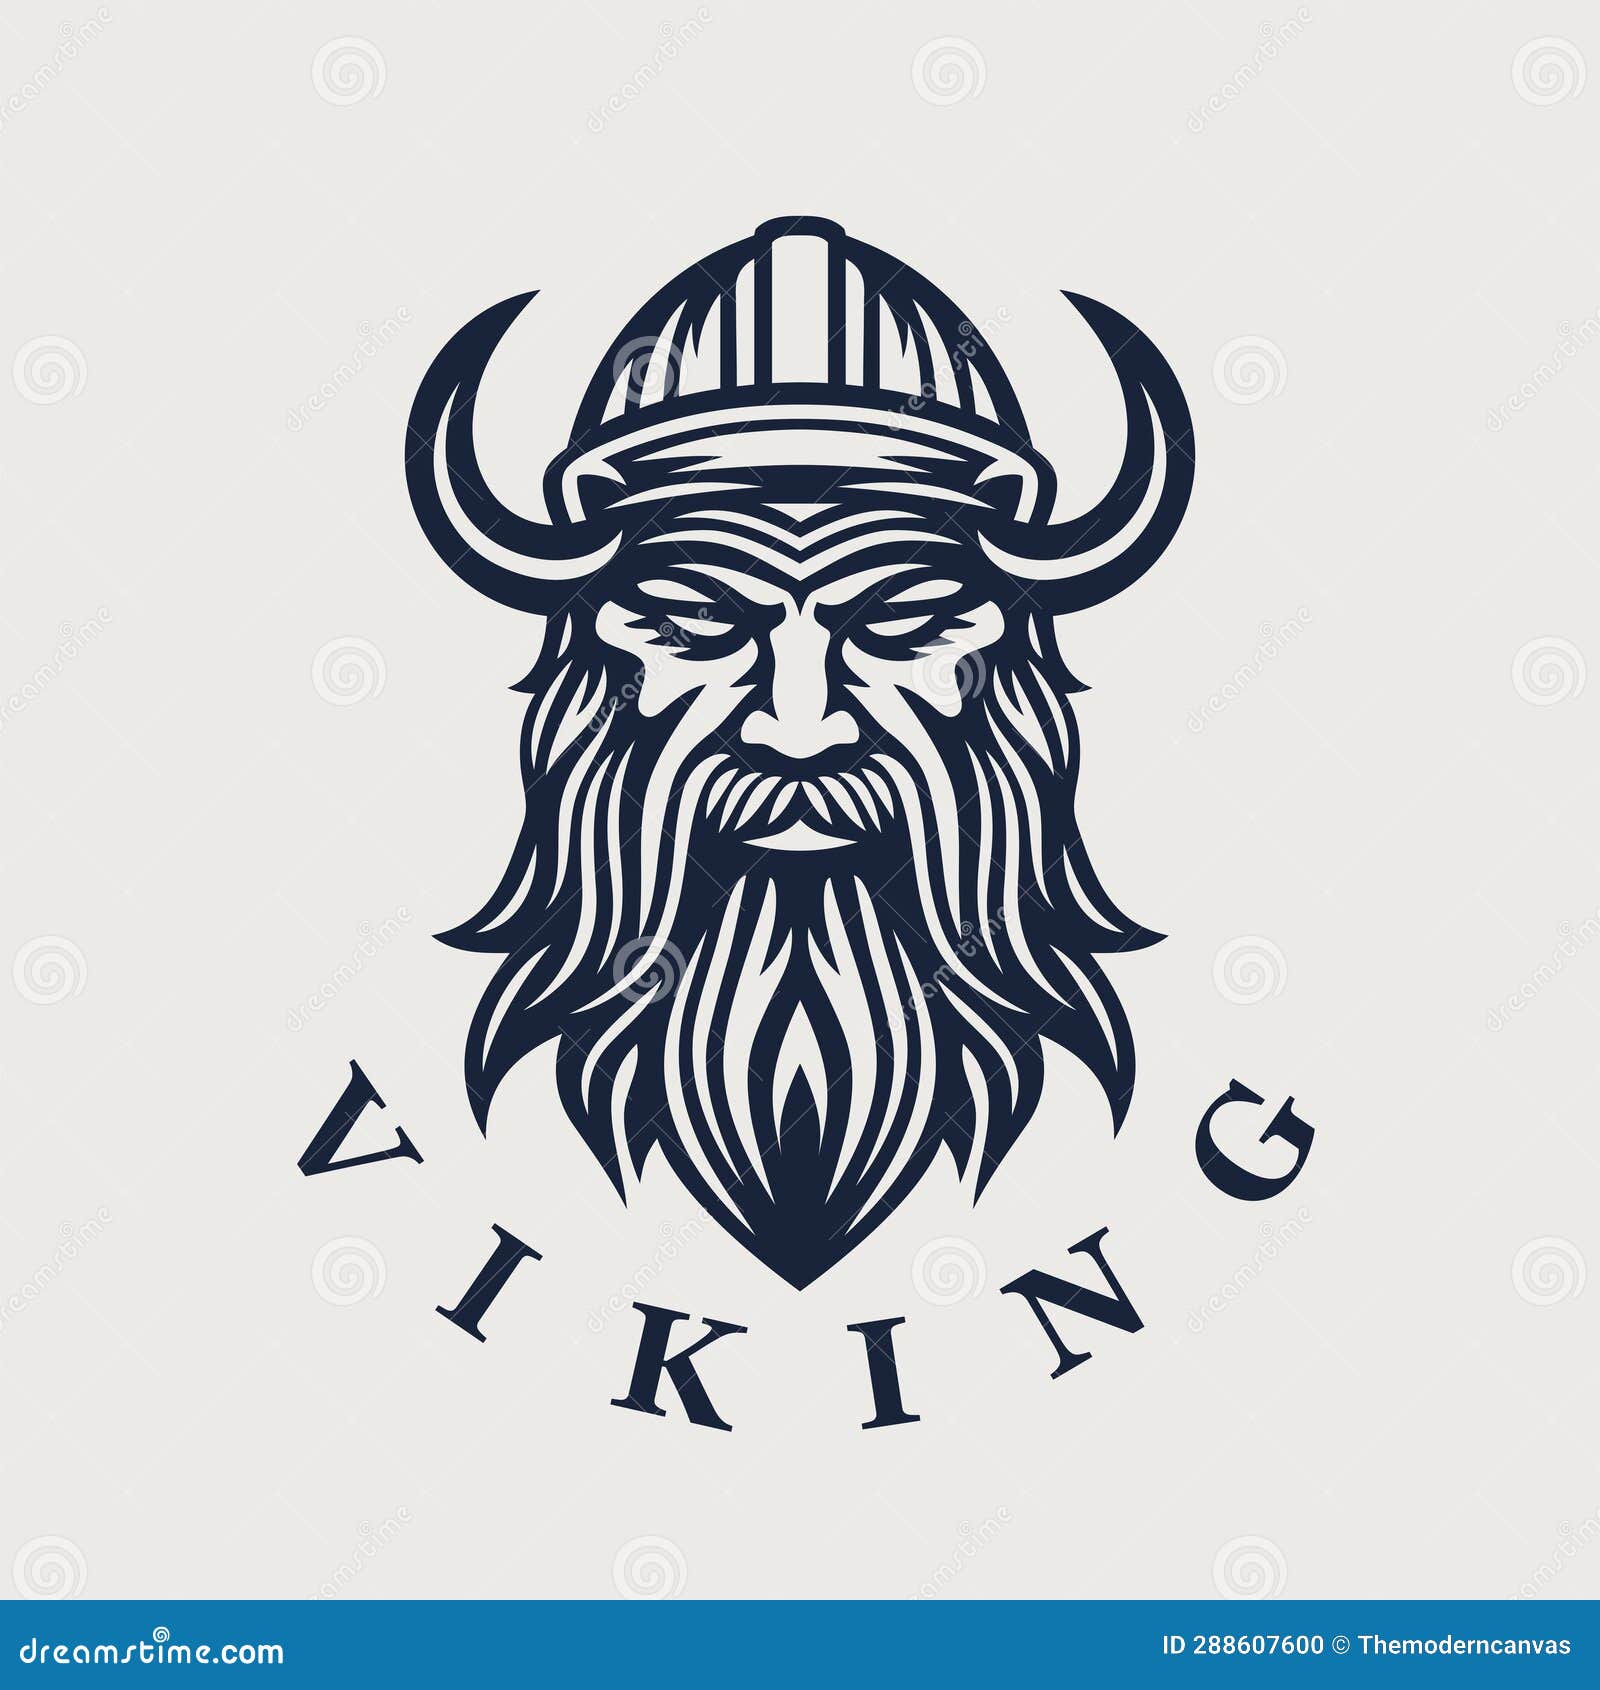 Nordic viking logo icon stock illustration. Illustration of helmet ...